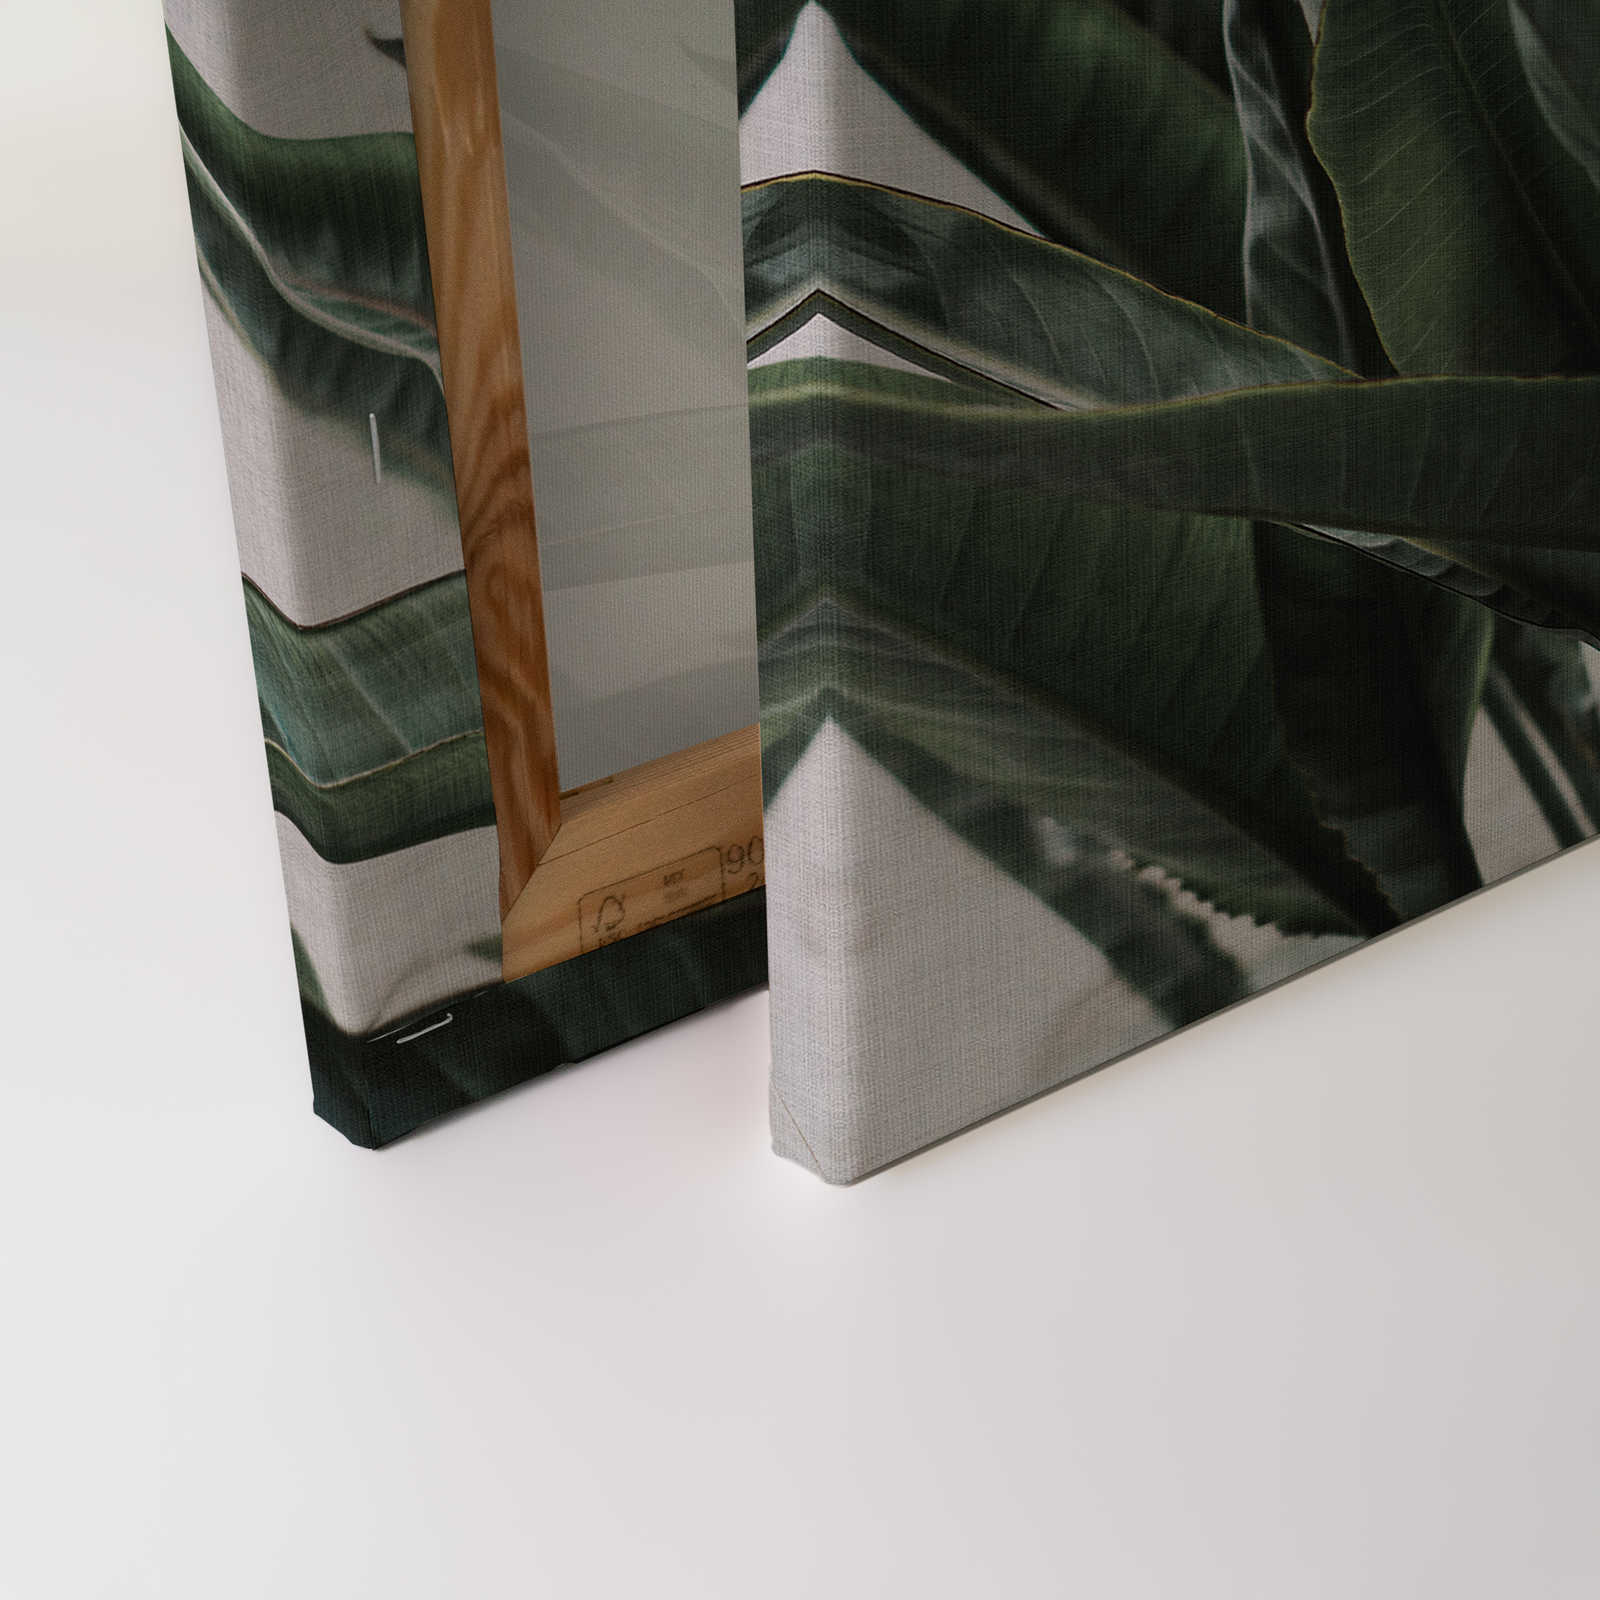             Urban jungle 2 - Palmenblätter Leinwandbild, naturleinen Struktur exotische Pflanzen – 0,90 m x 0,60 m
        